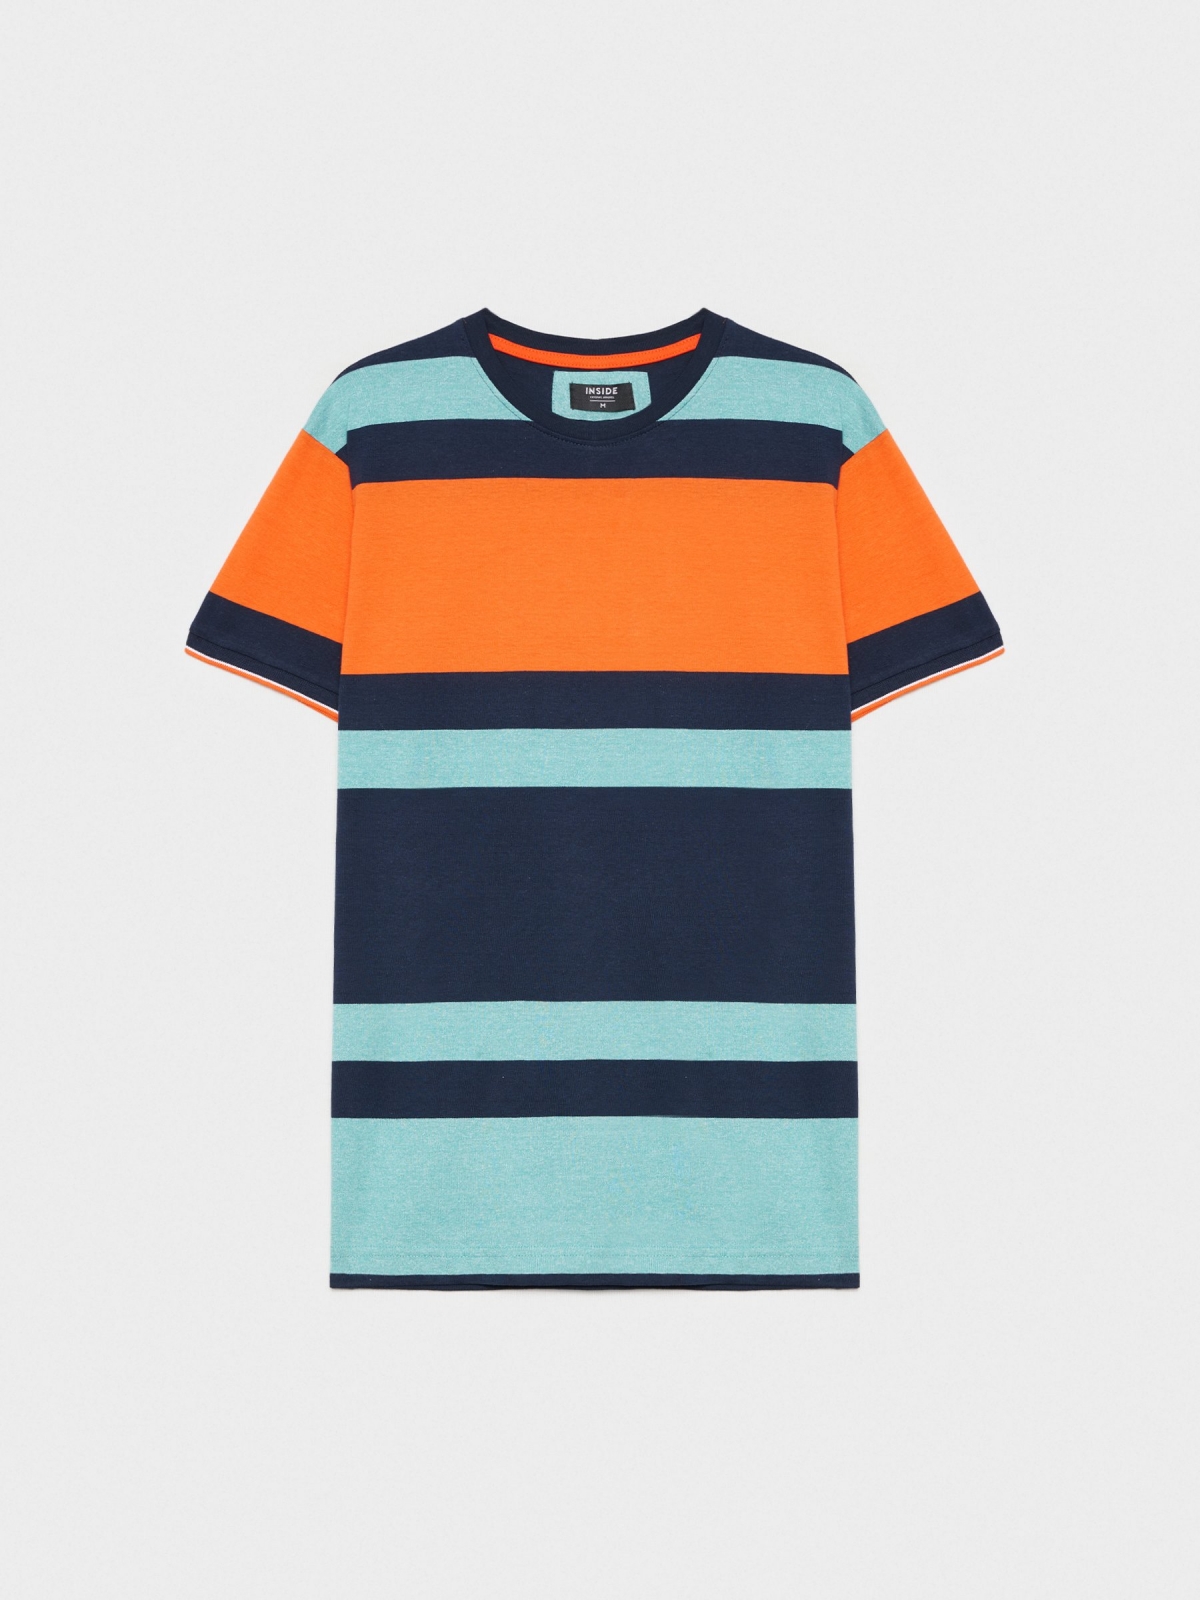  Blue and orange striped T-shirt blue